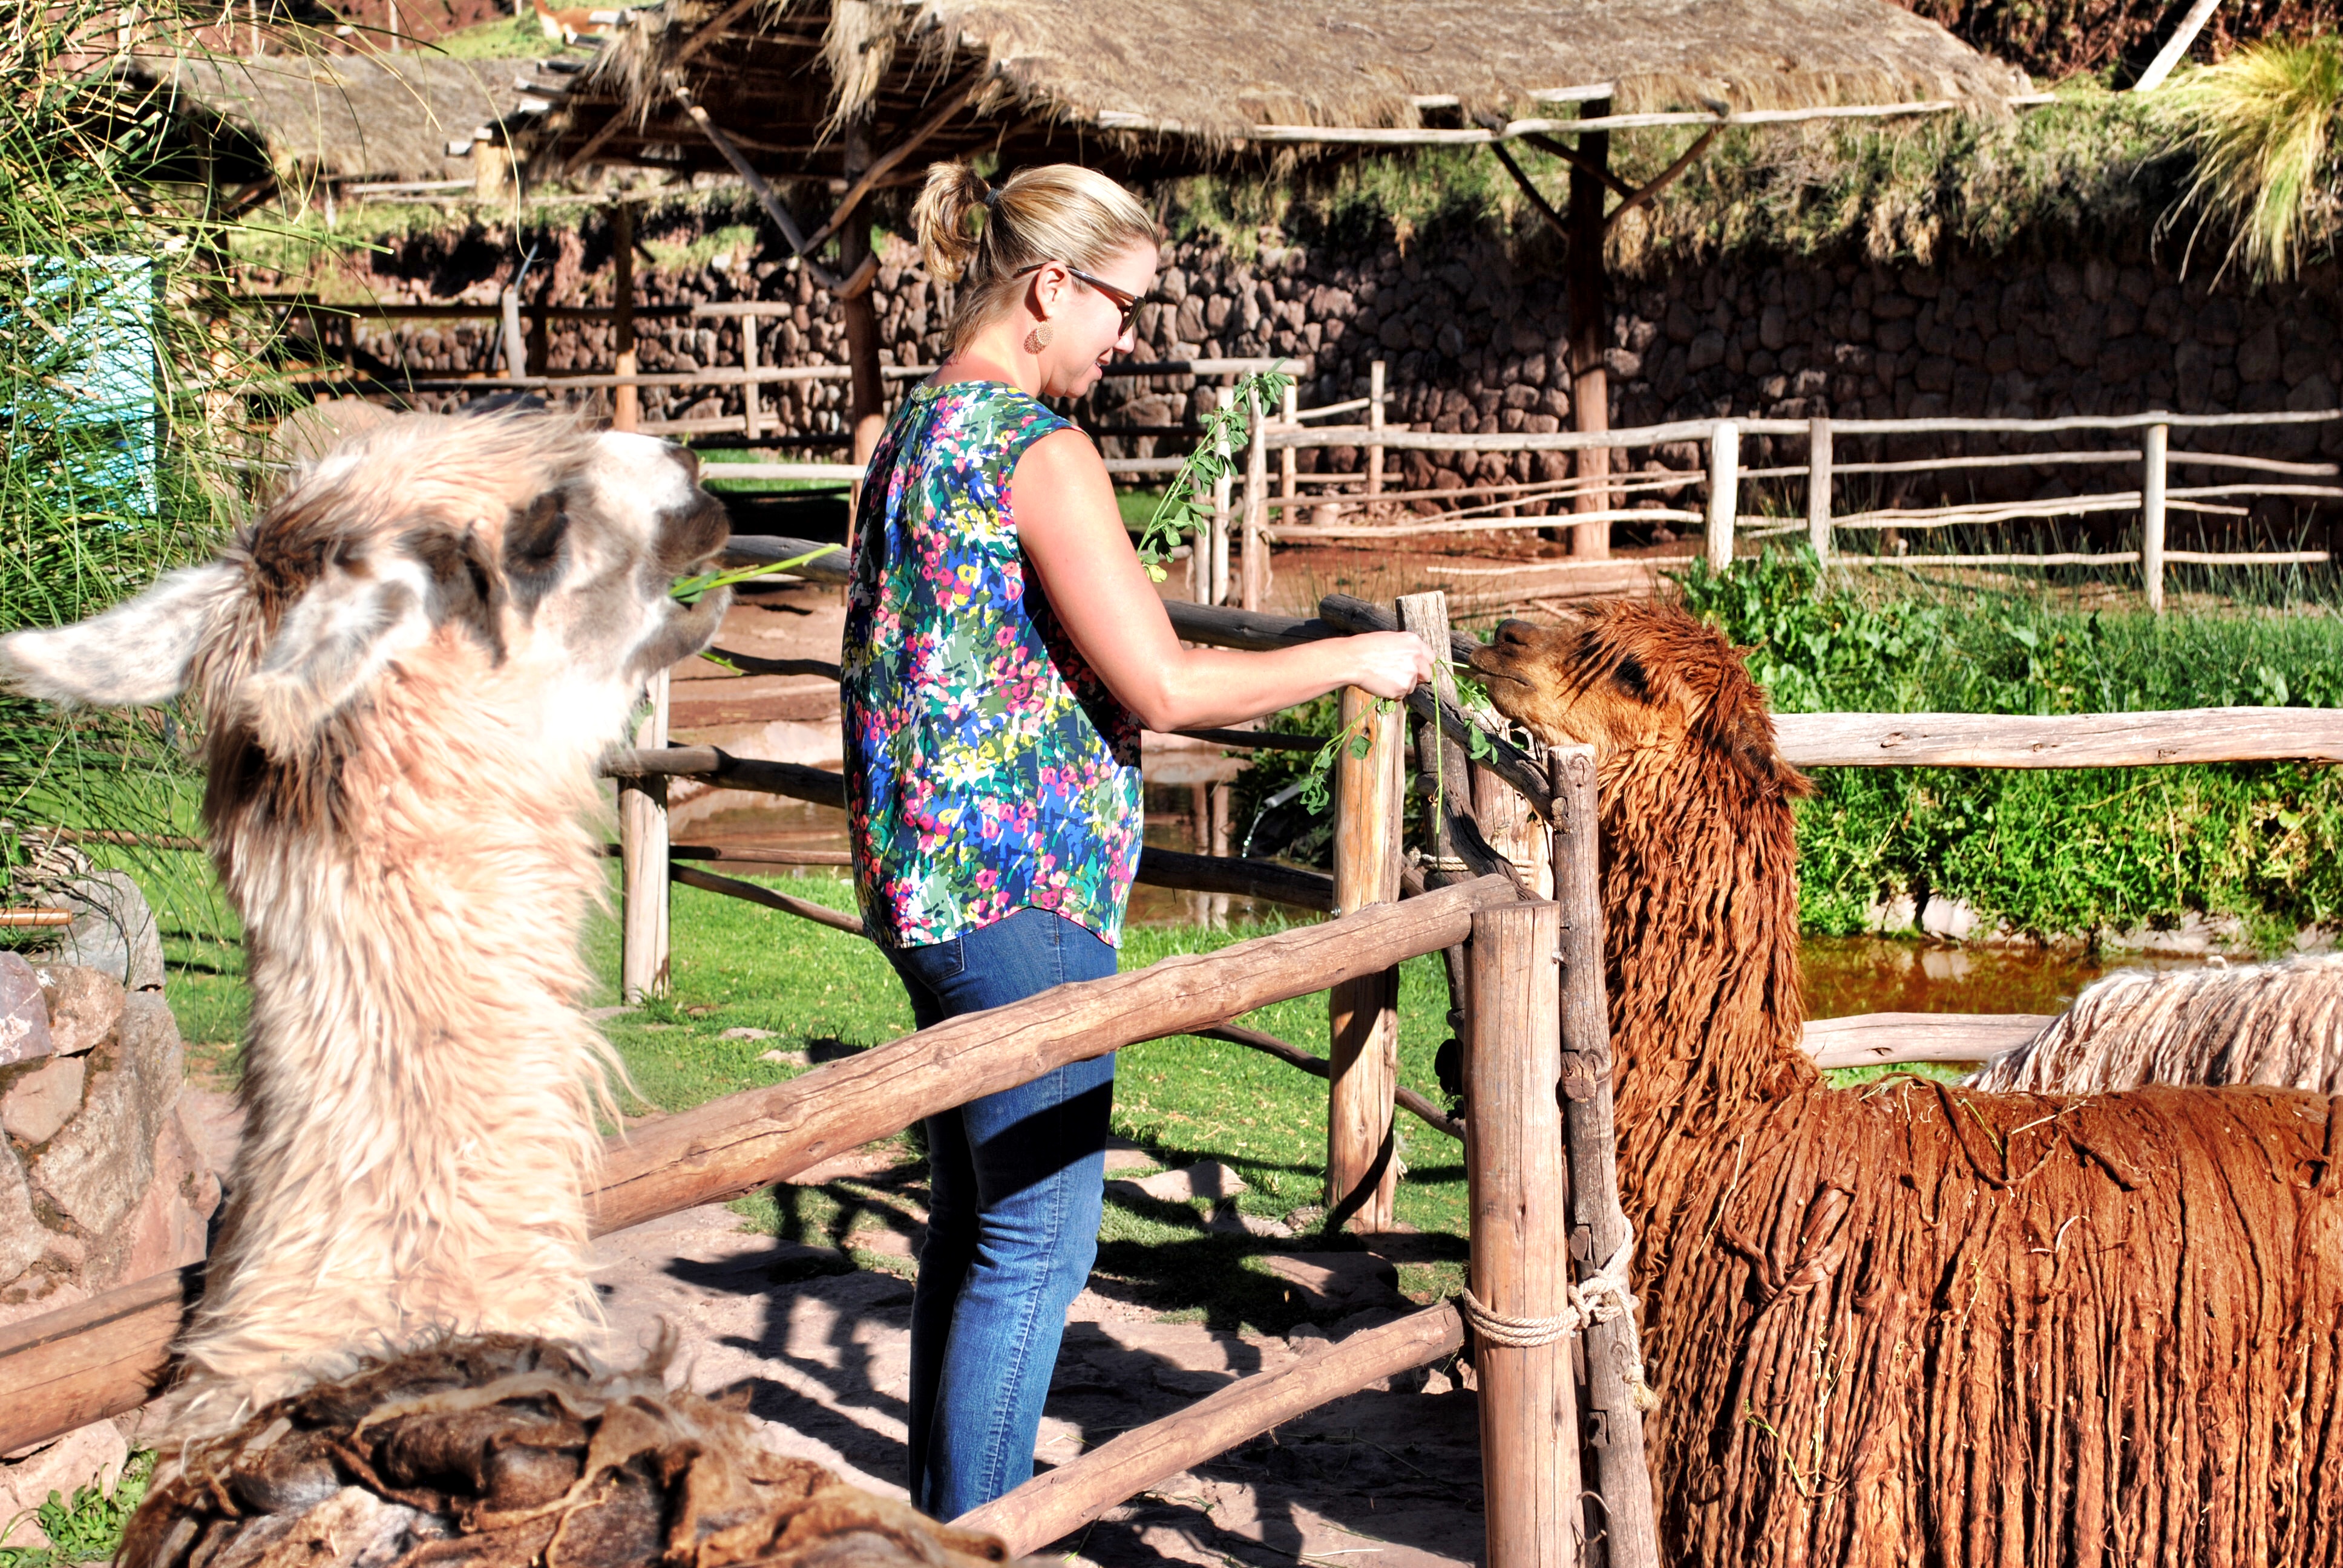 Feeding Alpacas at Peru's Awana Kancha Alpaca Farm